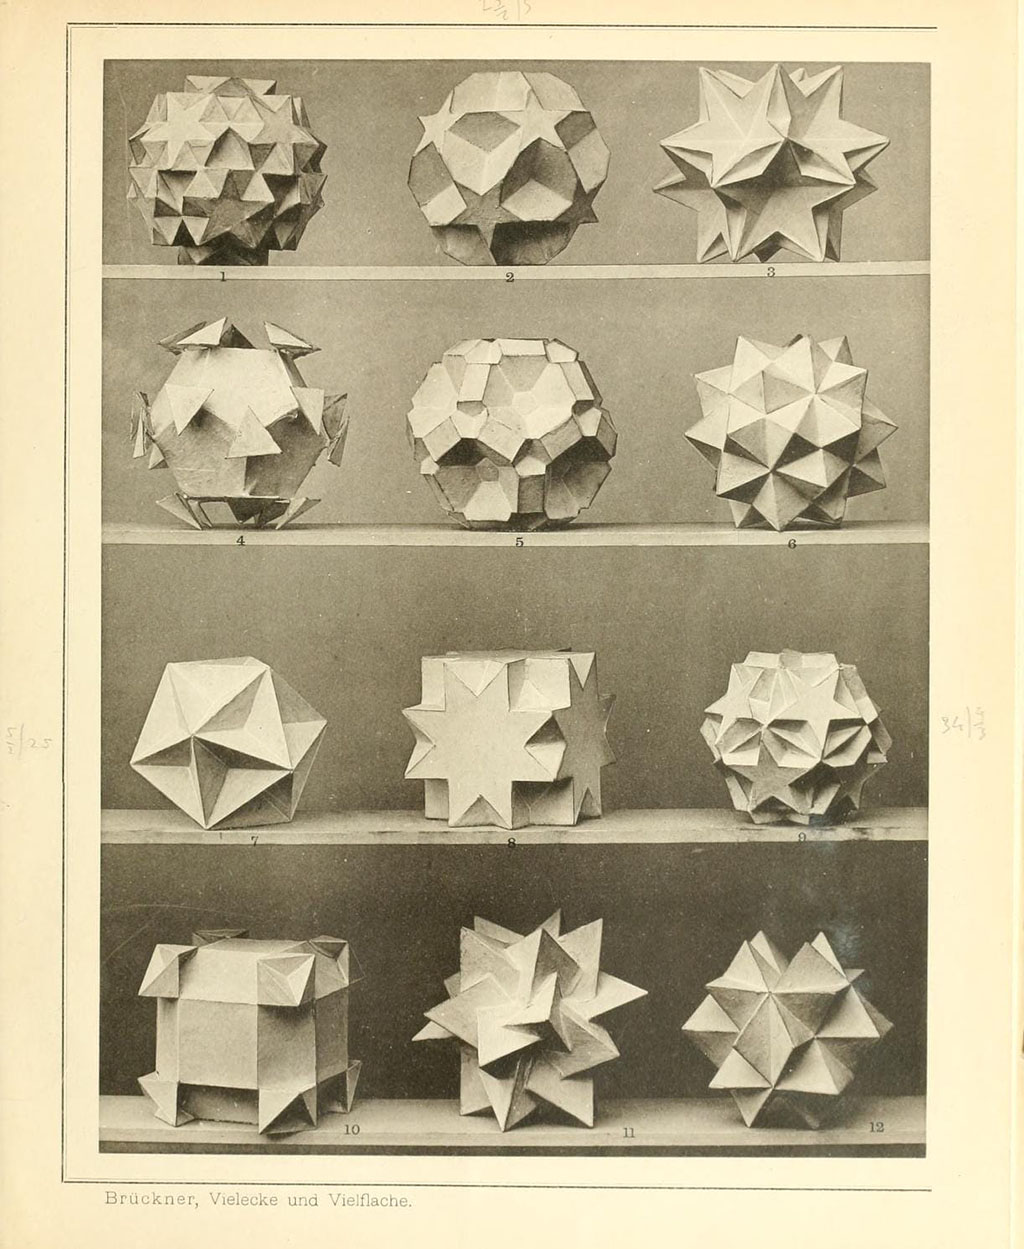 Polyhedra models